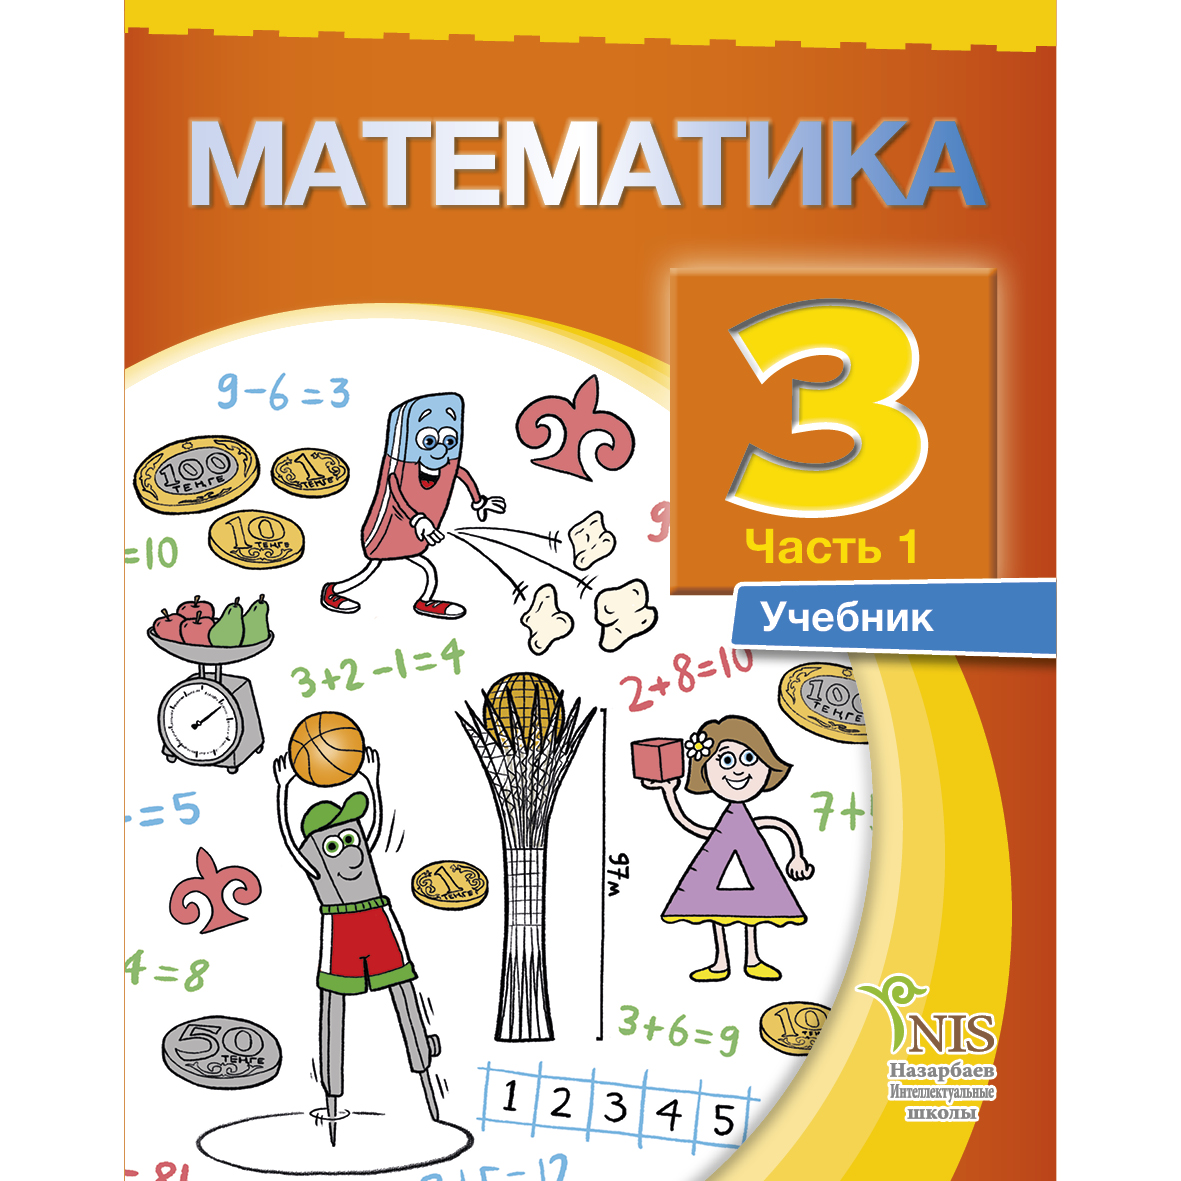 Матиматика учебник. Обложка для книги математика. Учебник математики. Учебник математики 3 класс обложка. Обложка учебника математики.